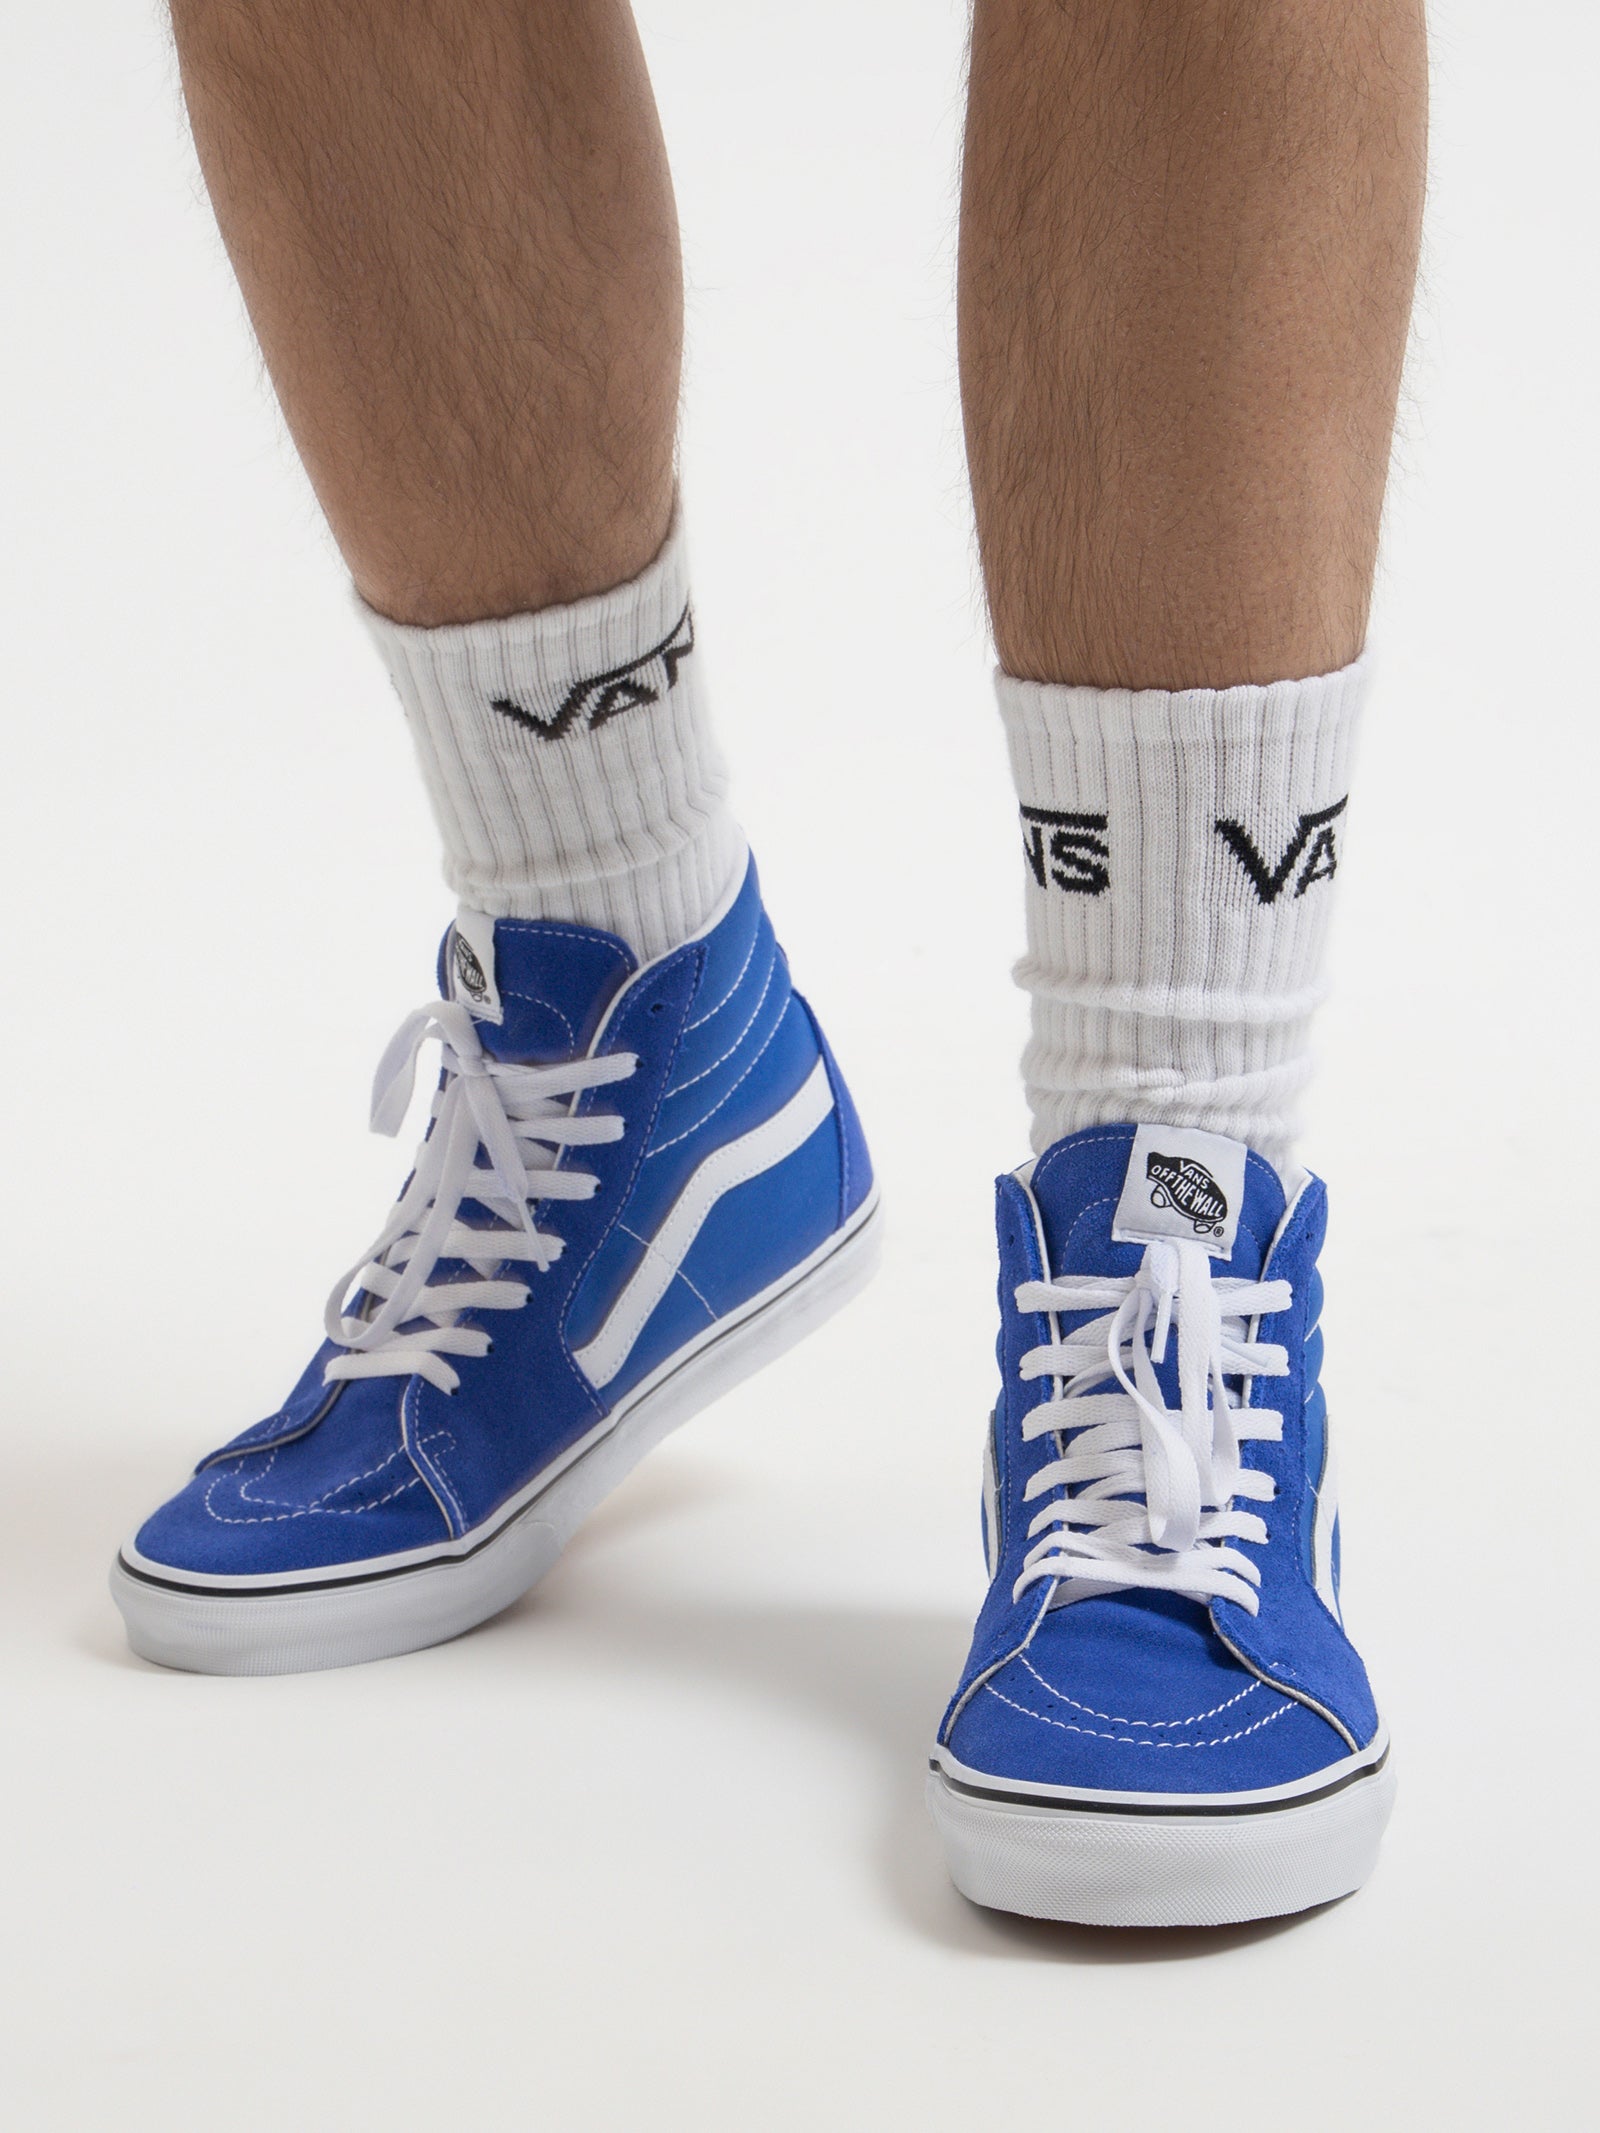 Vans - Authentic Color Theory Dazzling Blue - Shoes